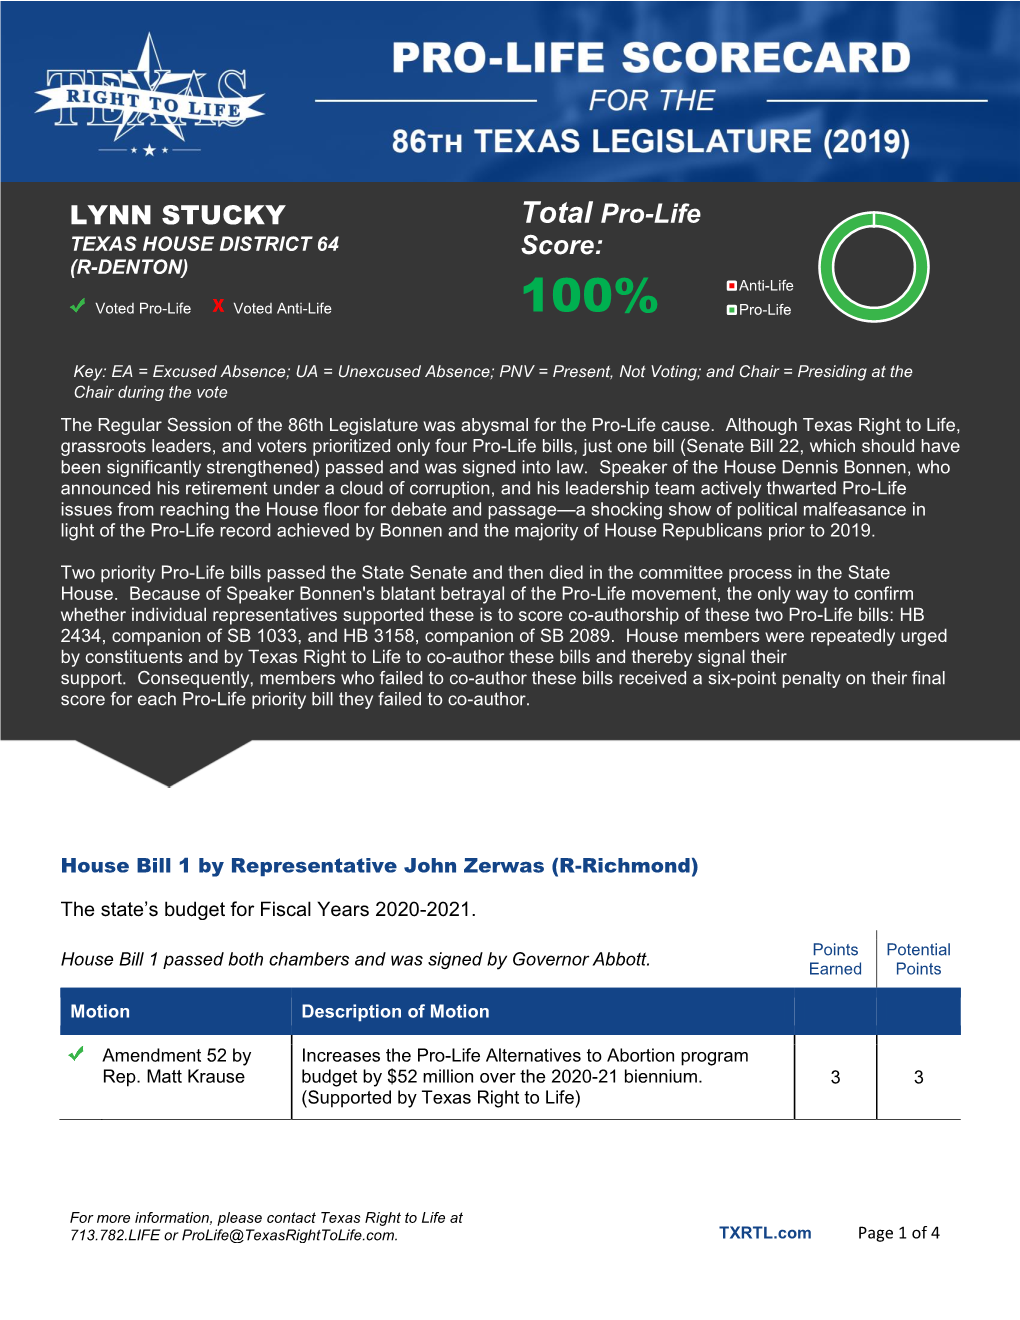 LYNN STUCKY Total Pro-Life Score